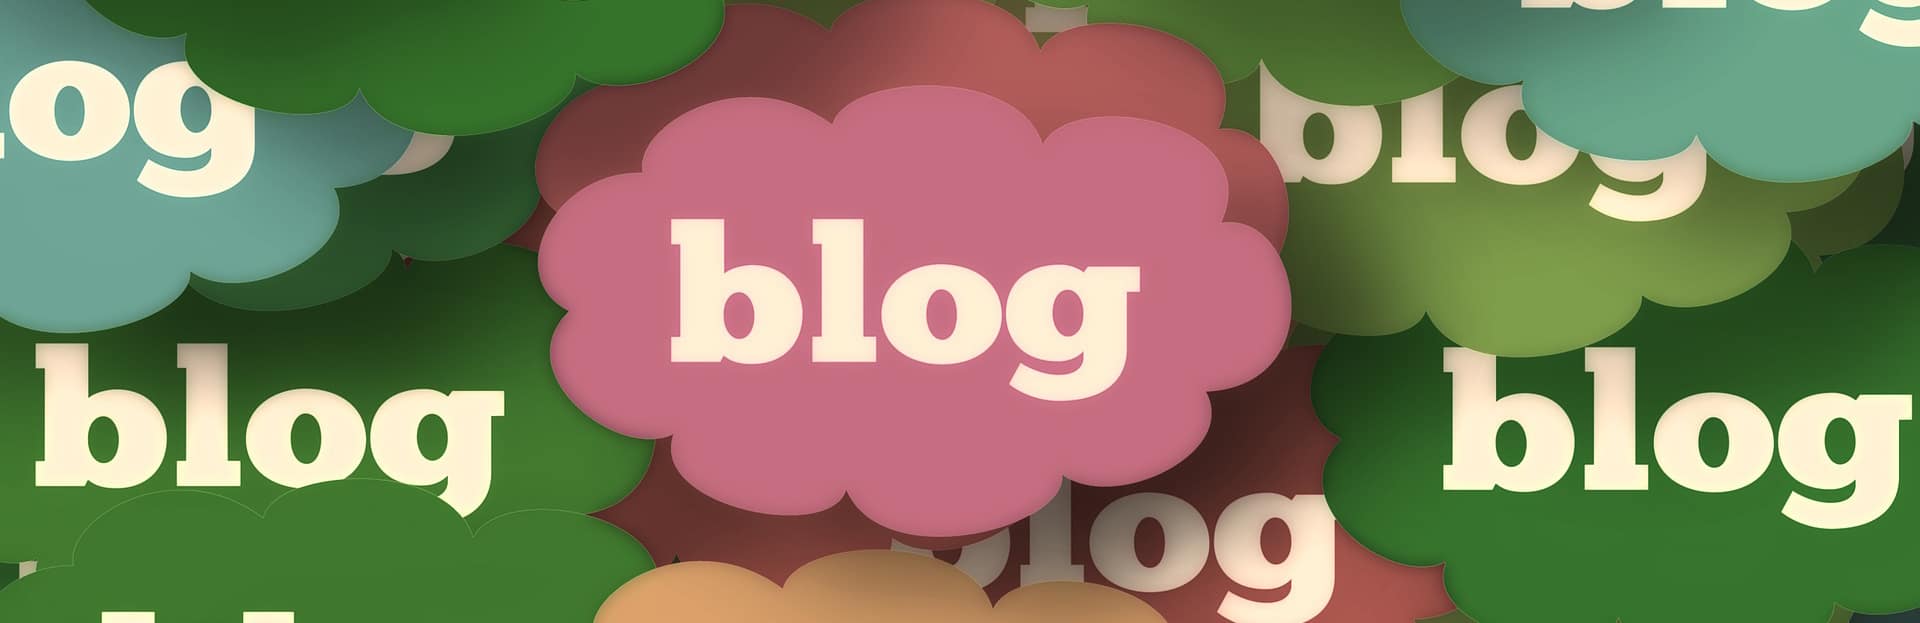 Blog clouds